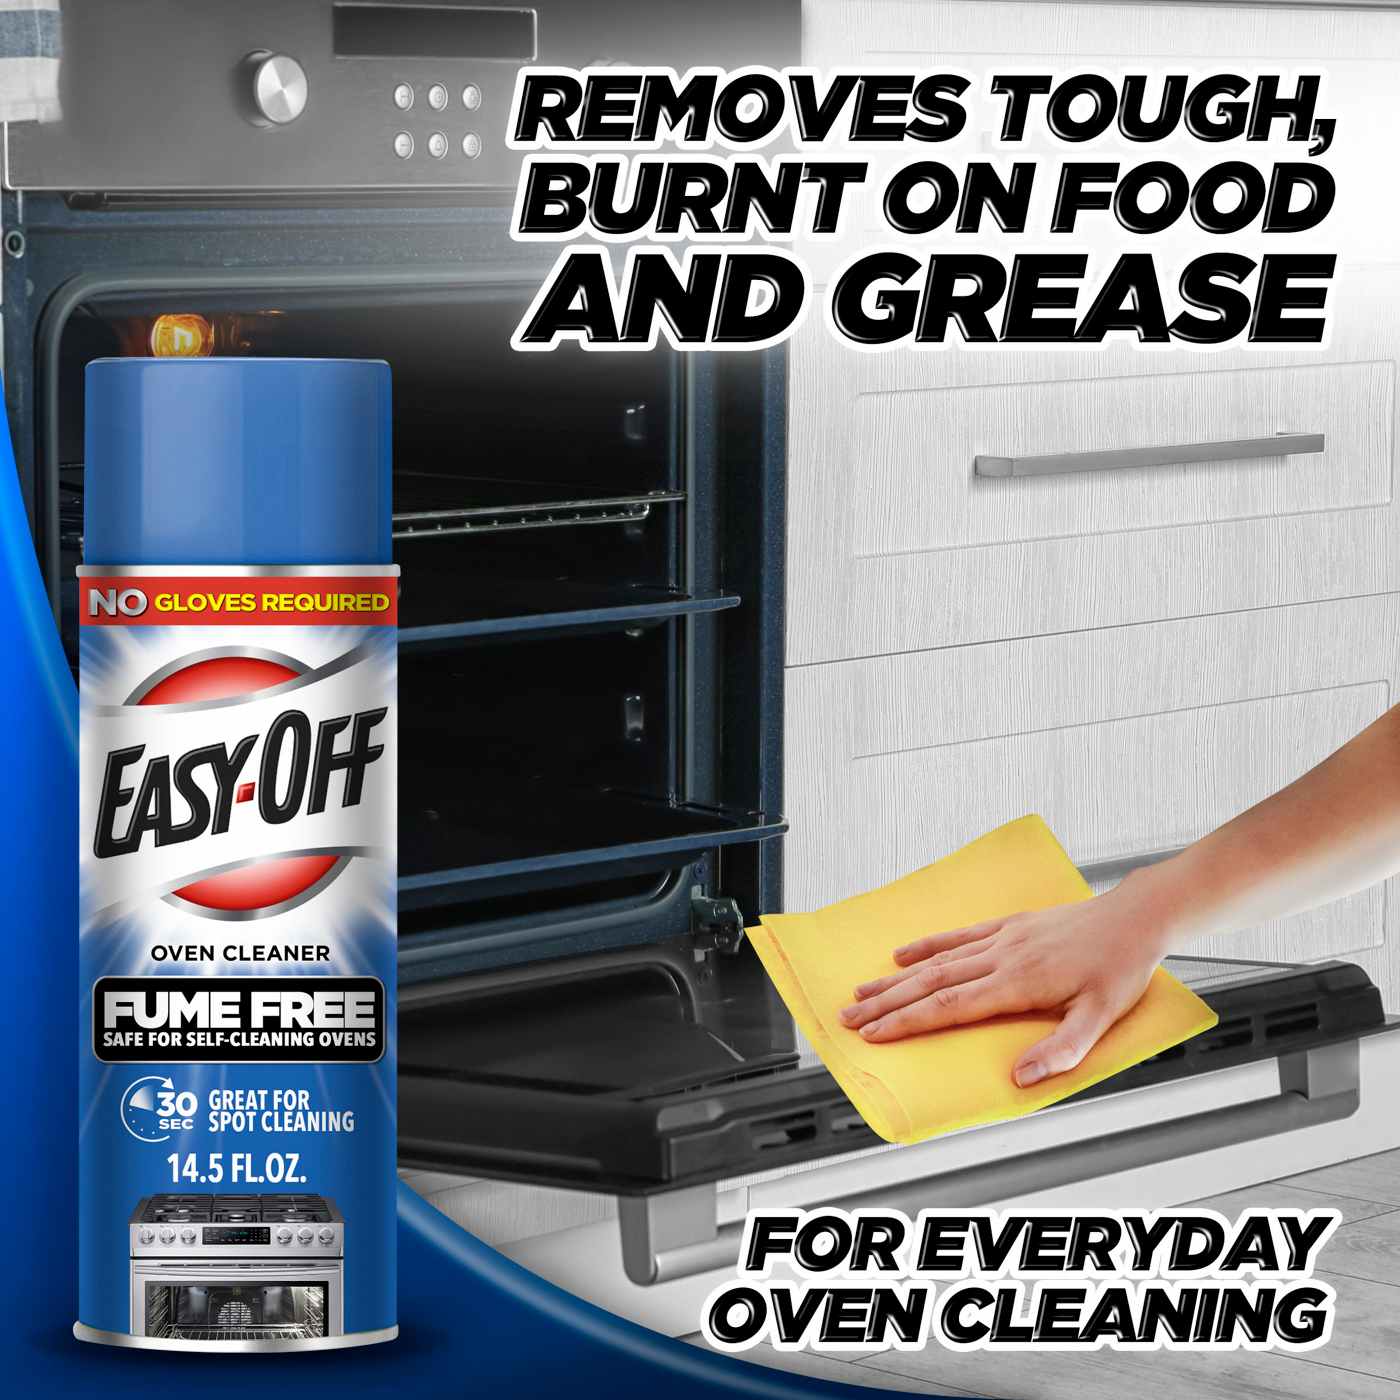  Easy-Off Fume Free Oven Cleaner Spray, Lemon, 24oz, Removes  Grease : Health & Household